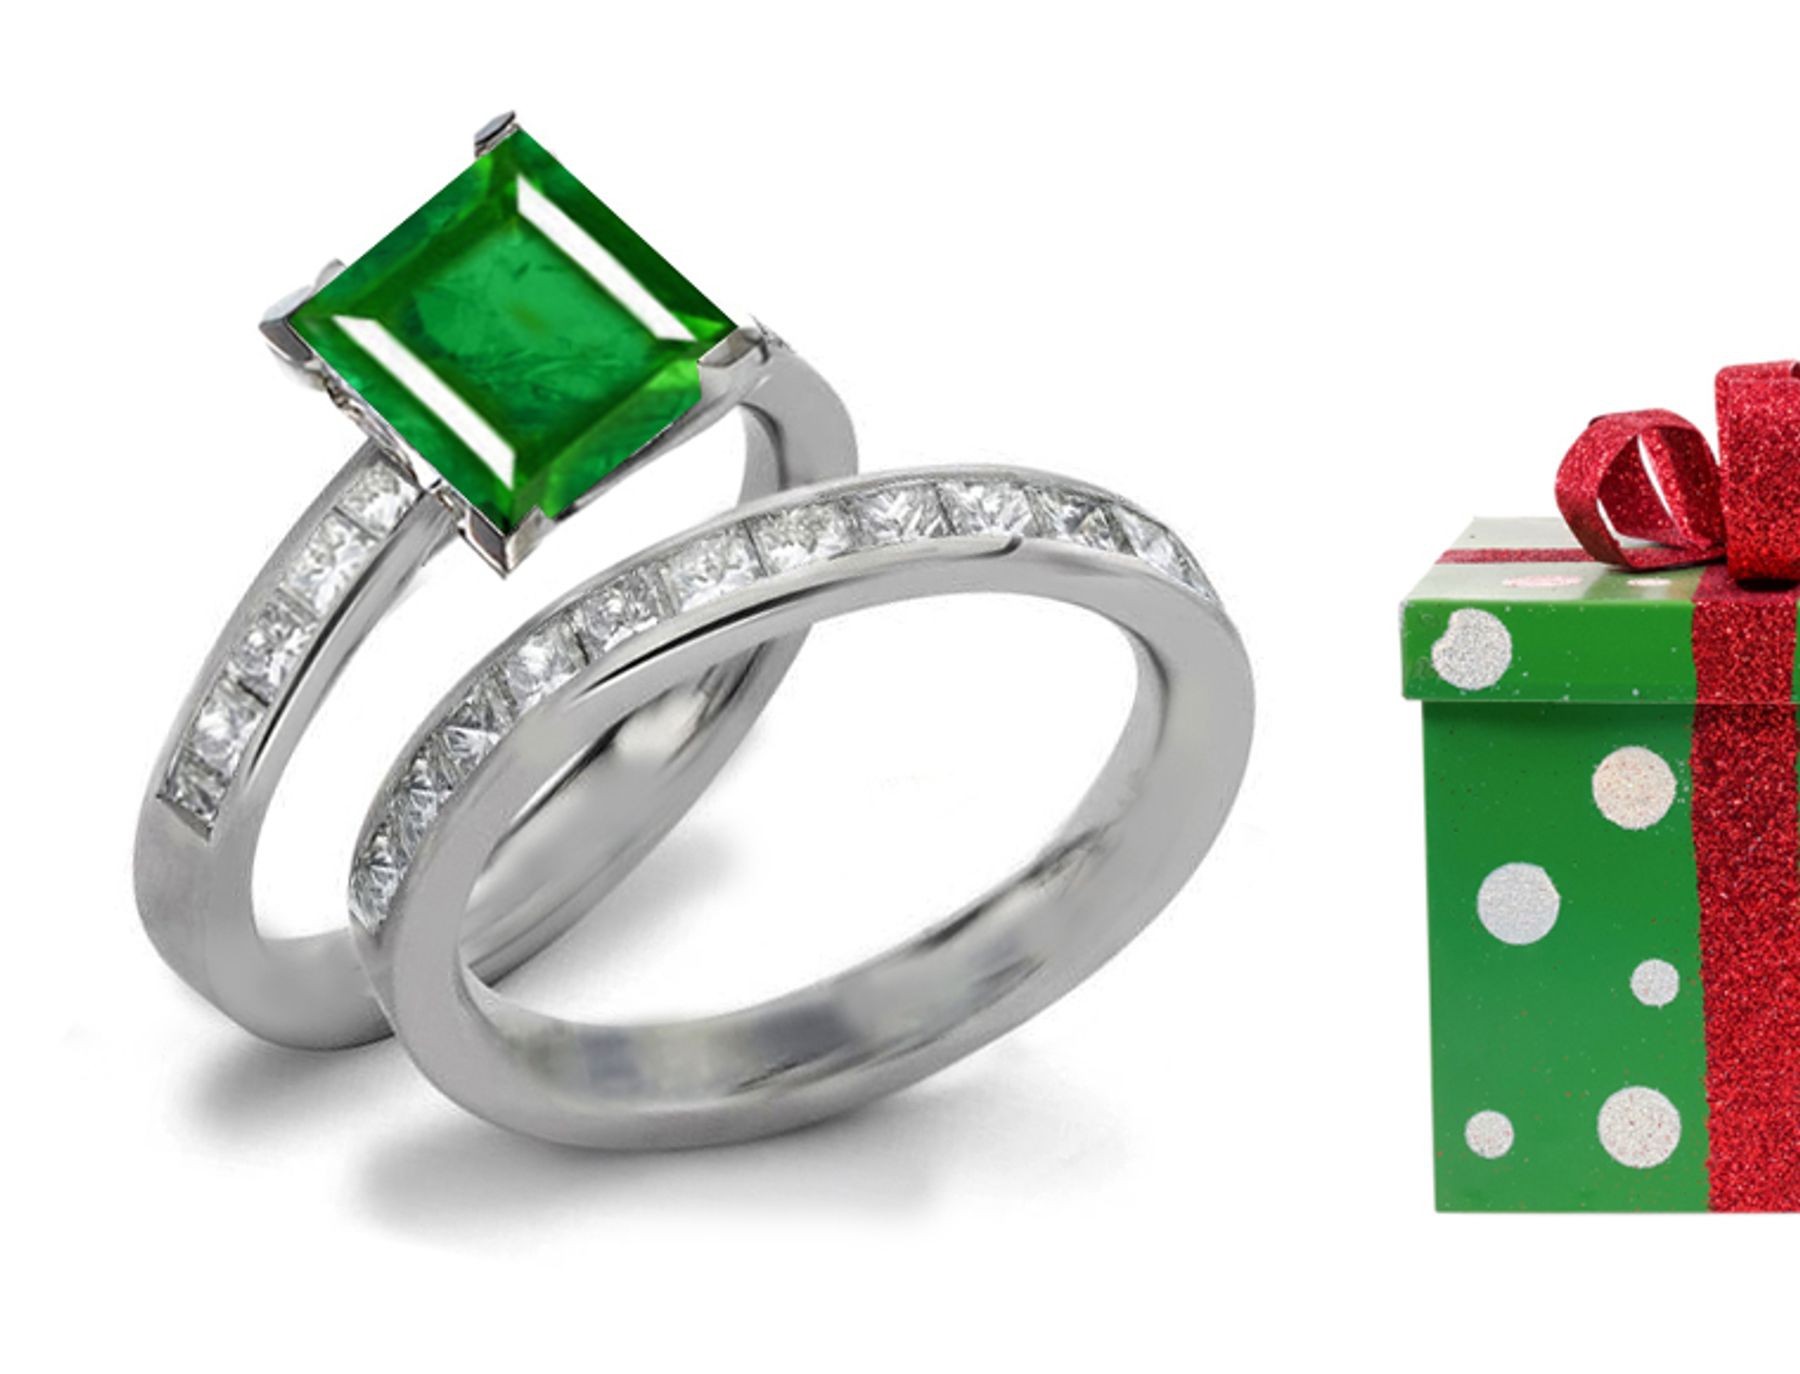 14k Princess Cut Emerald & Diamond Ring Paired with Princess Cut Diamond Band